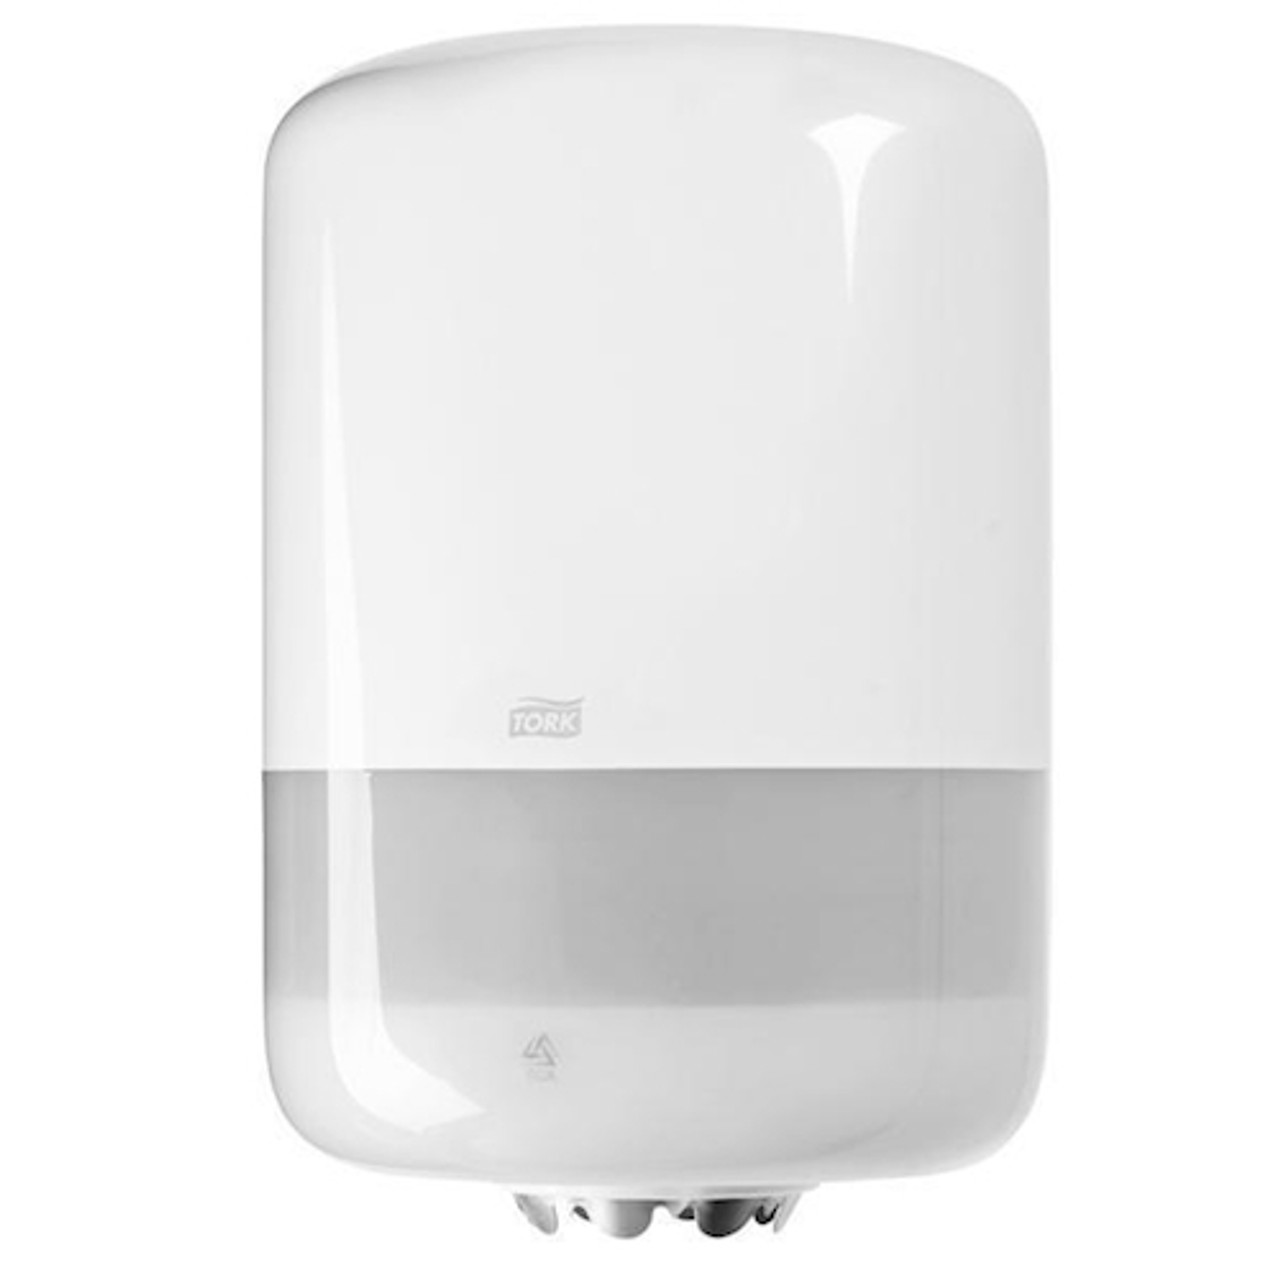 Tork Centrefeed Dispenser White M2 System (559030)
Tork Products